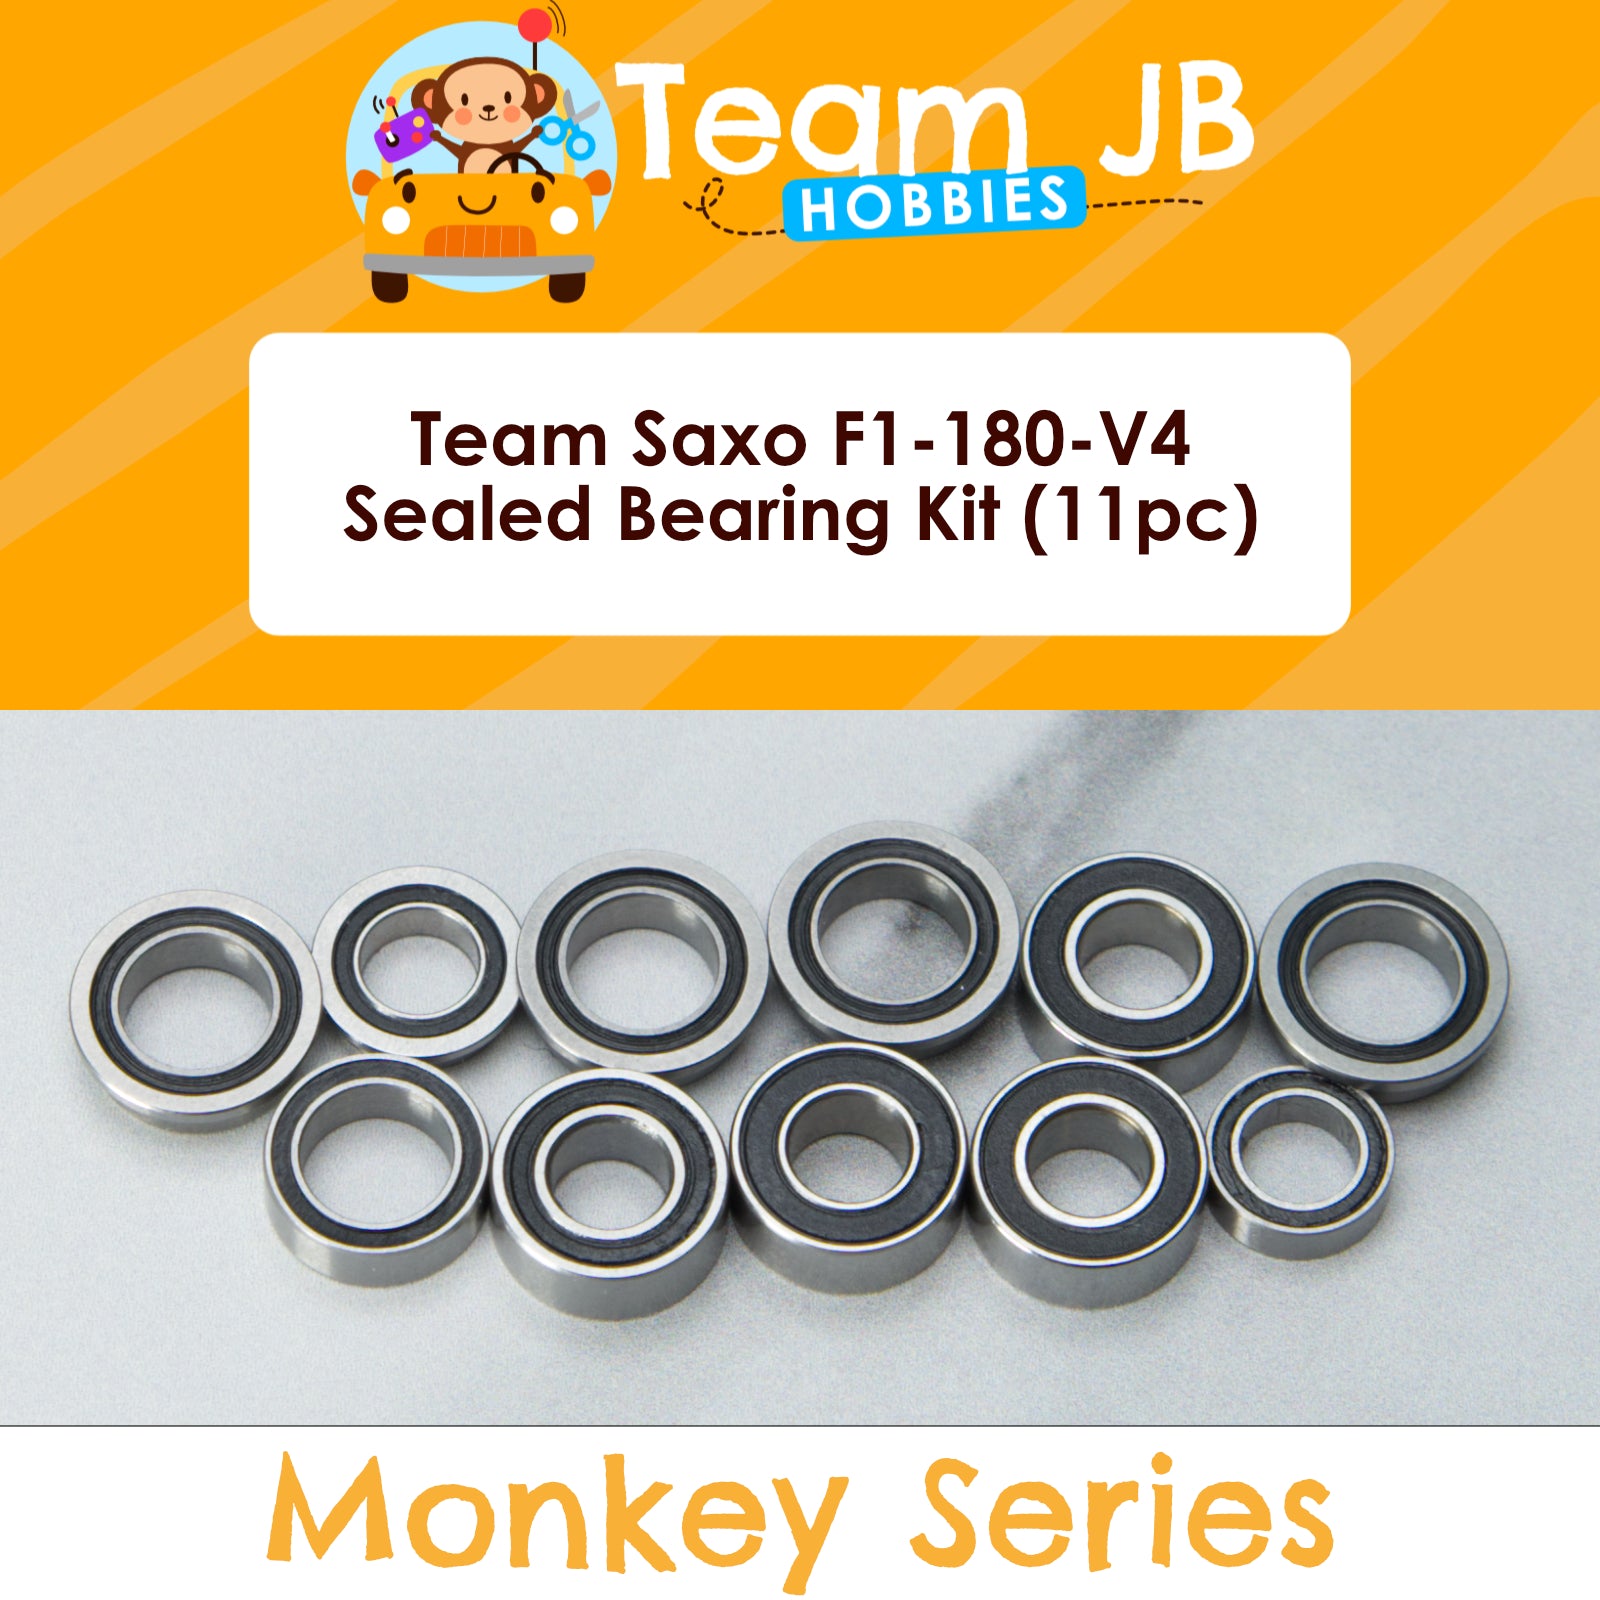 Team Saxo F1-180-V4 - Sealed Bearing Kit